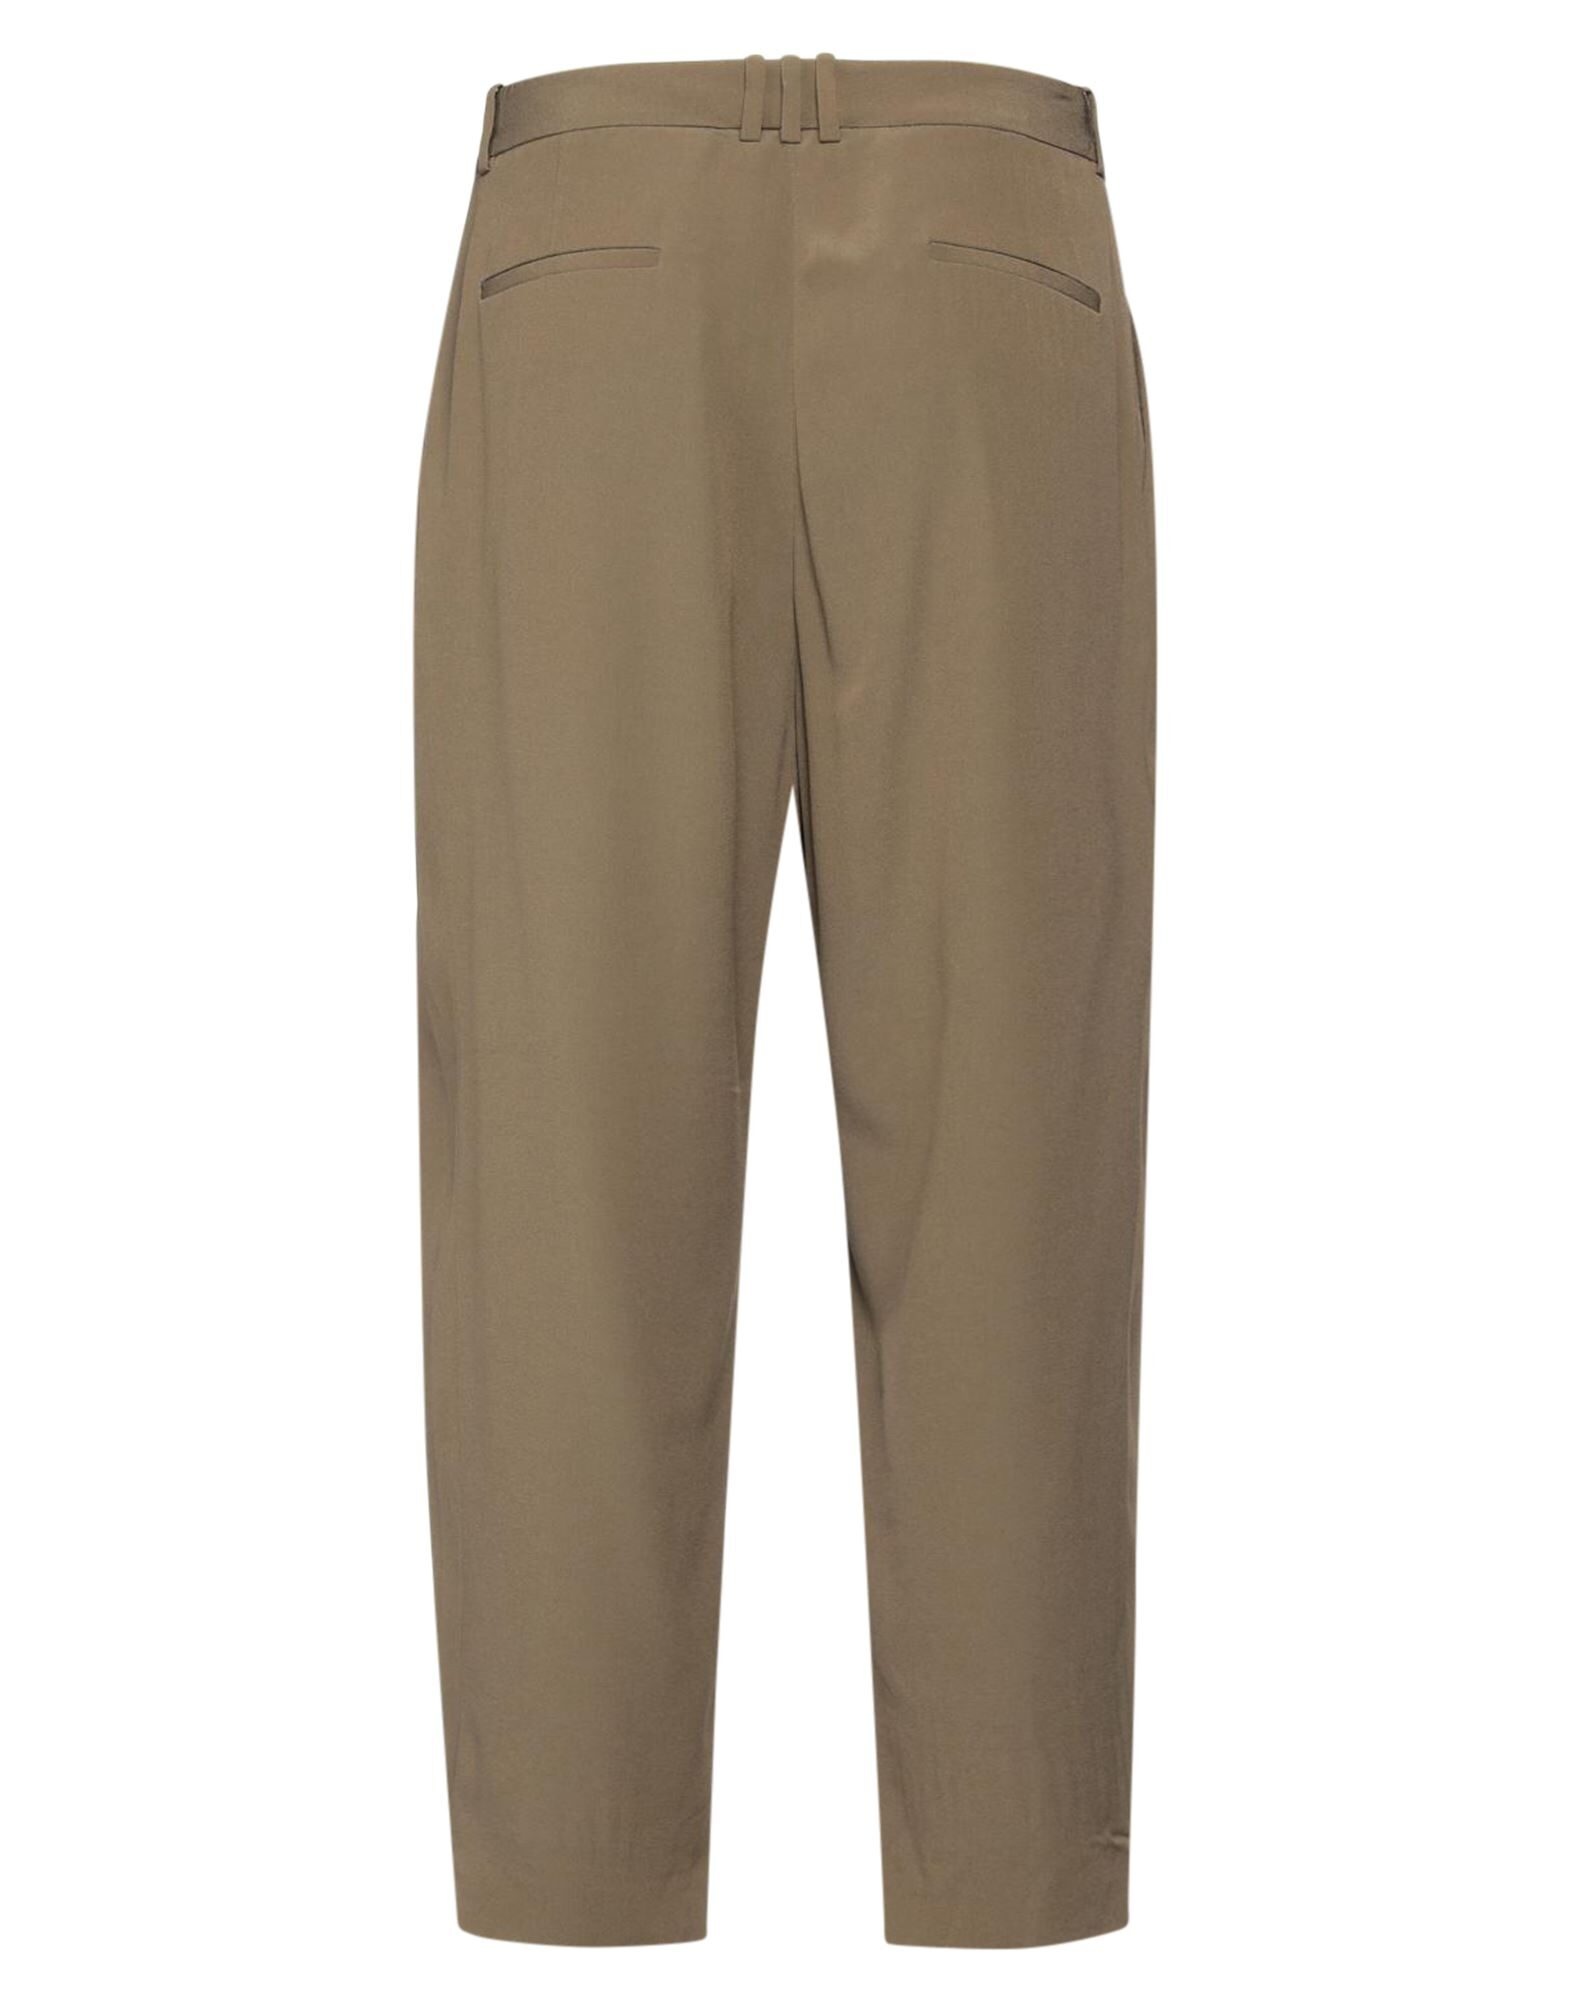 Khaki Men's Casual Pants - 2